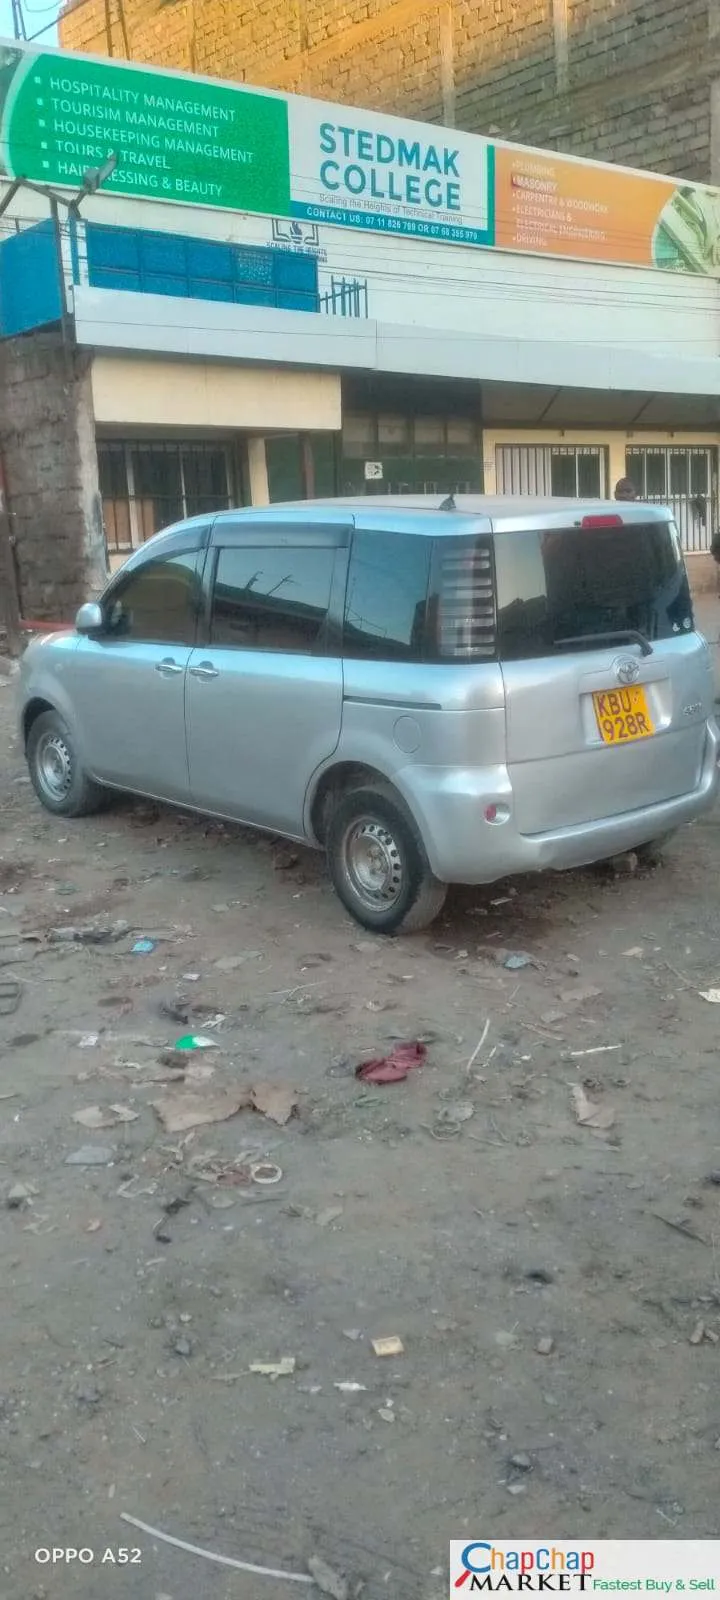 Toyota SIENTA for sale in kenya hire purchase installments You Pay 30% Deposit Trade in OK Wow sienta Kenya 480k Only